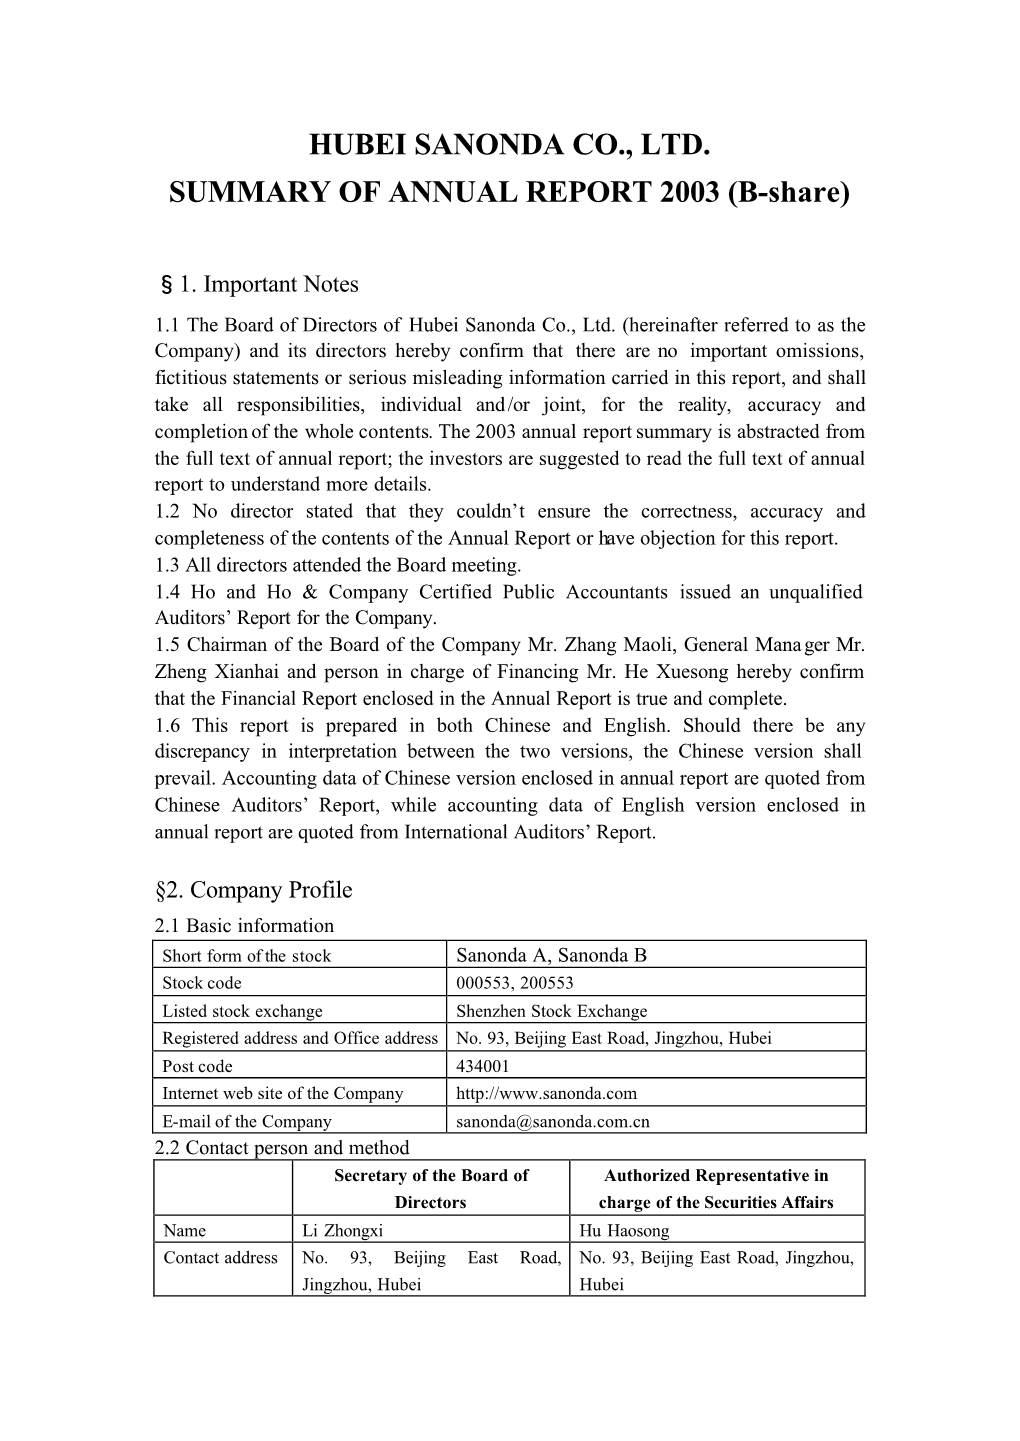 HUBEI SANONDA CO., LTD. SUMMARY of ANNUAL REPORT 2003 (B-Share)